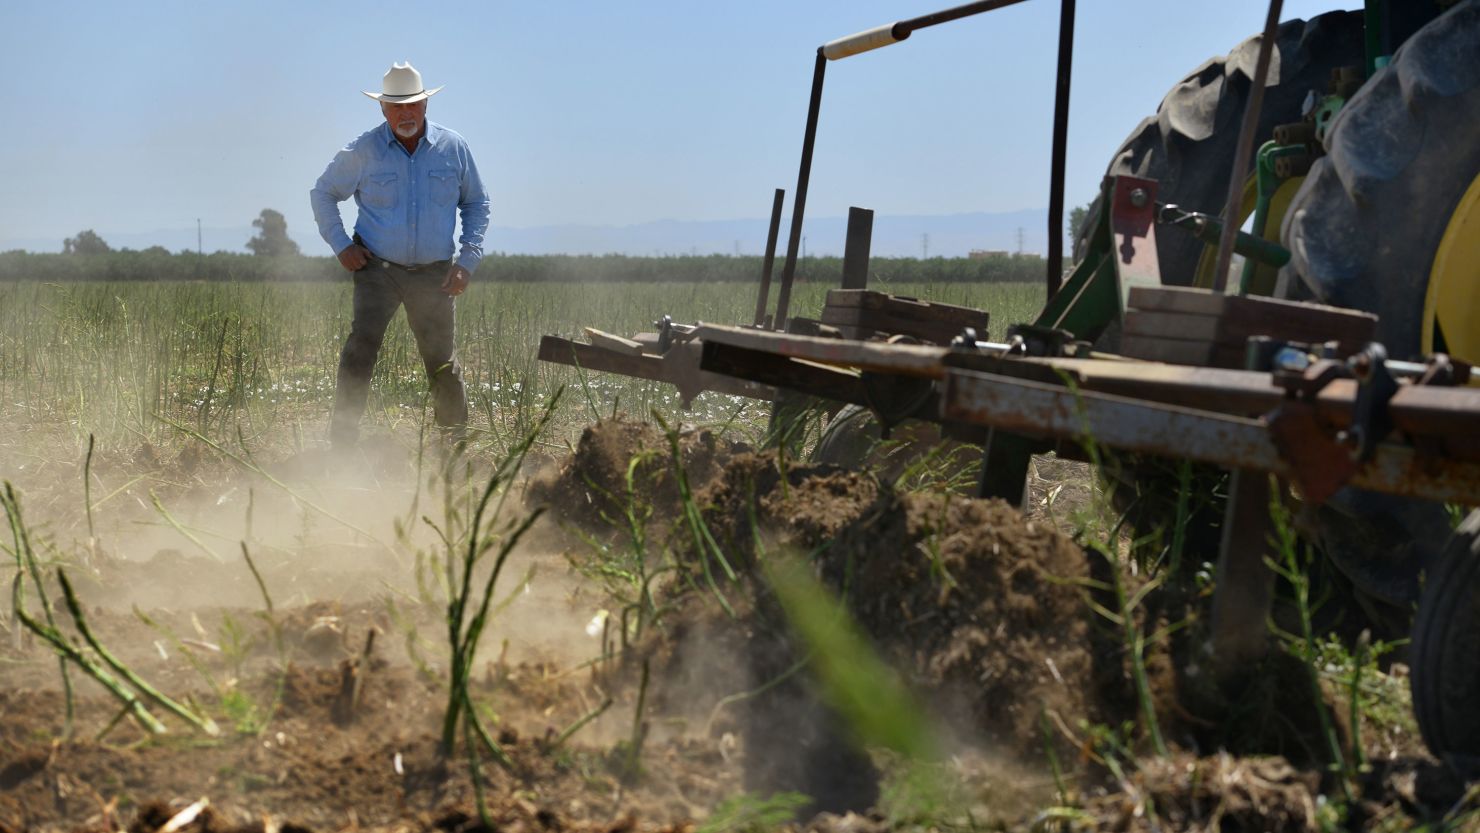 Farmer Joe Del Bosque watches as a tractor driven by his employee destroys a 70-acre organic asparagus field in Firebaugh, California.